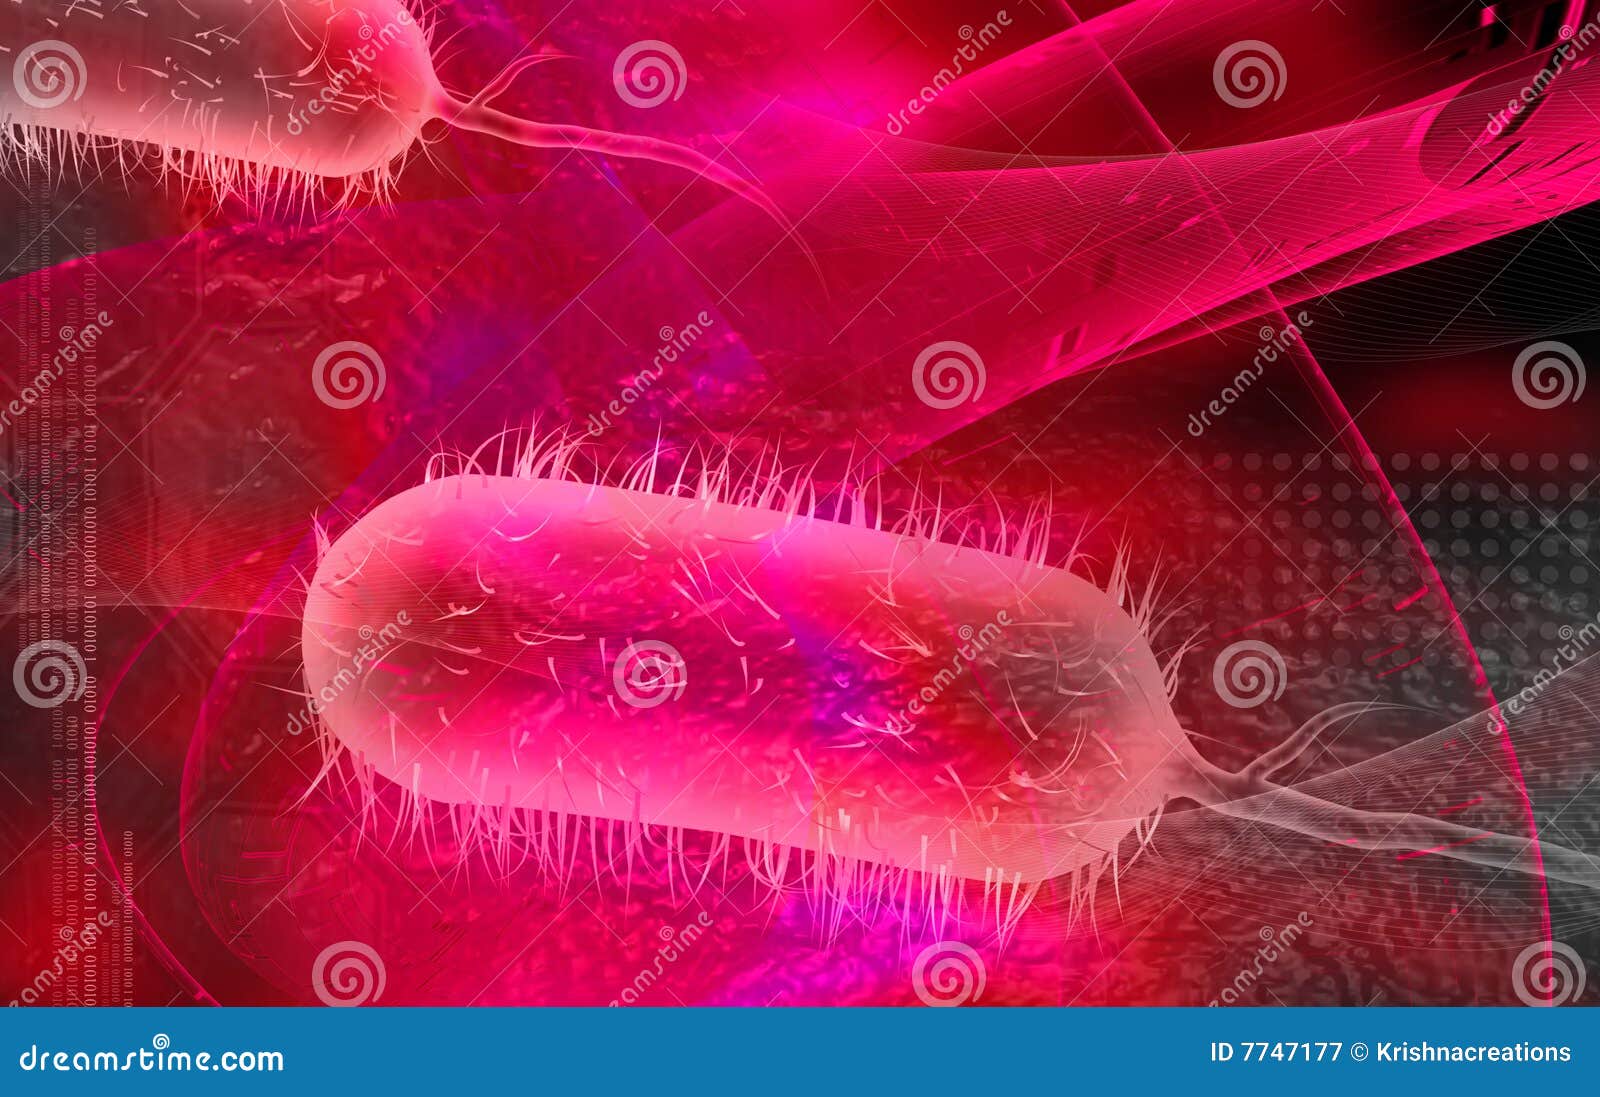 bacillus bacteria